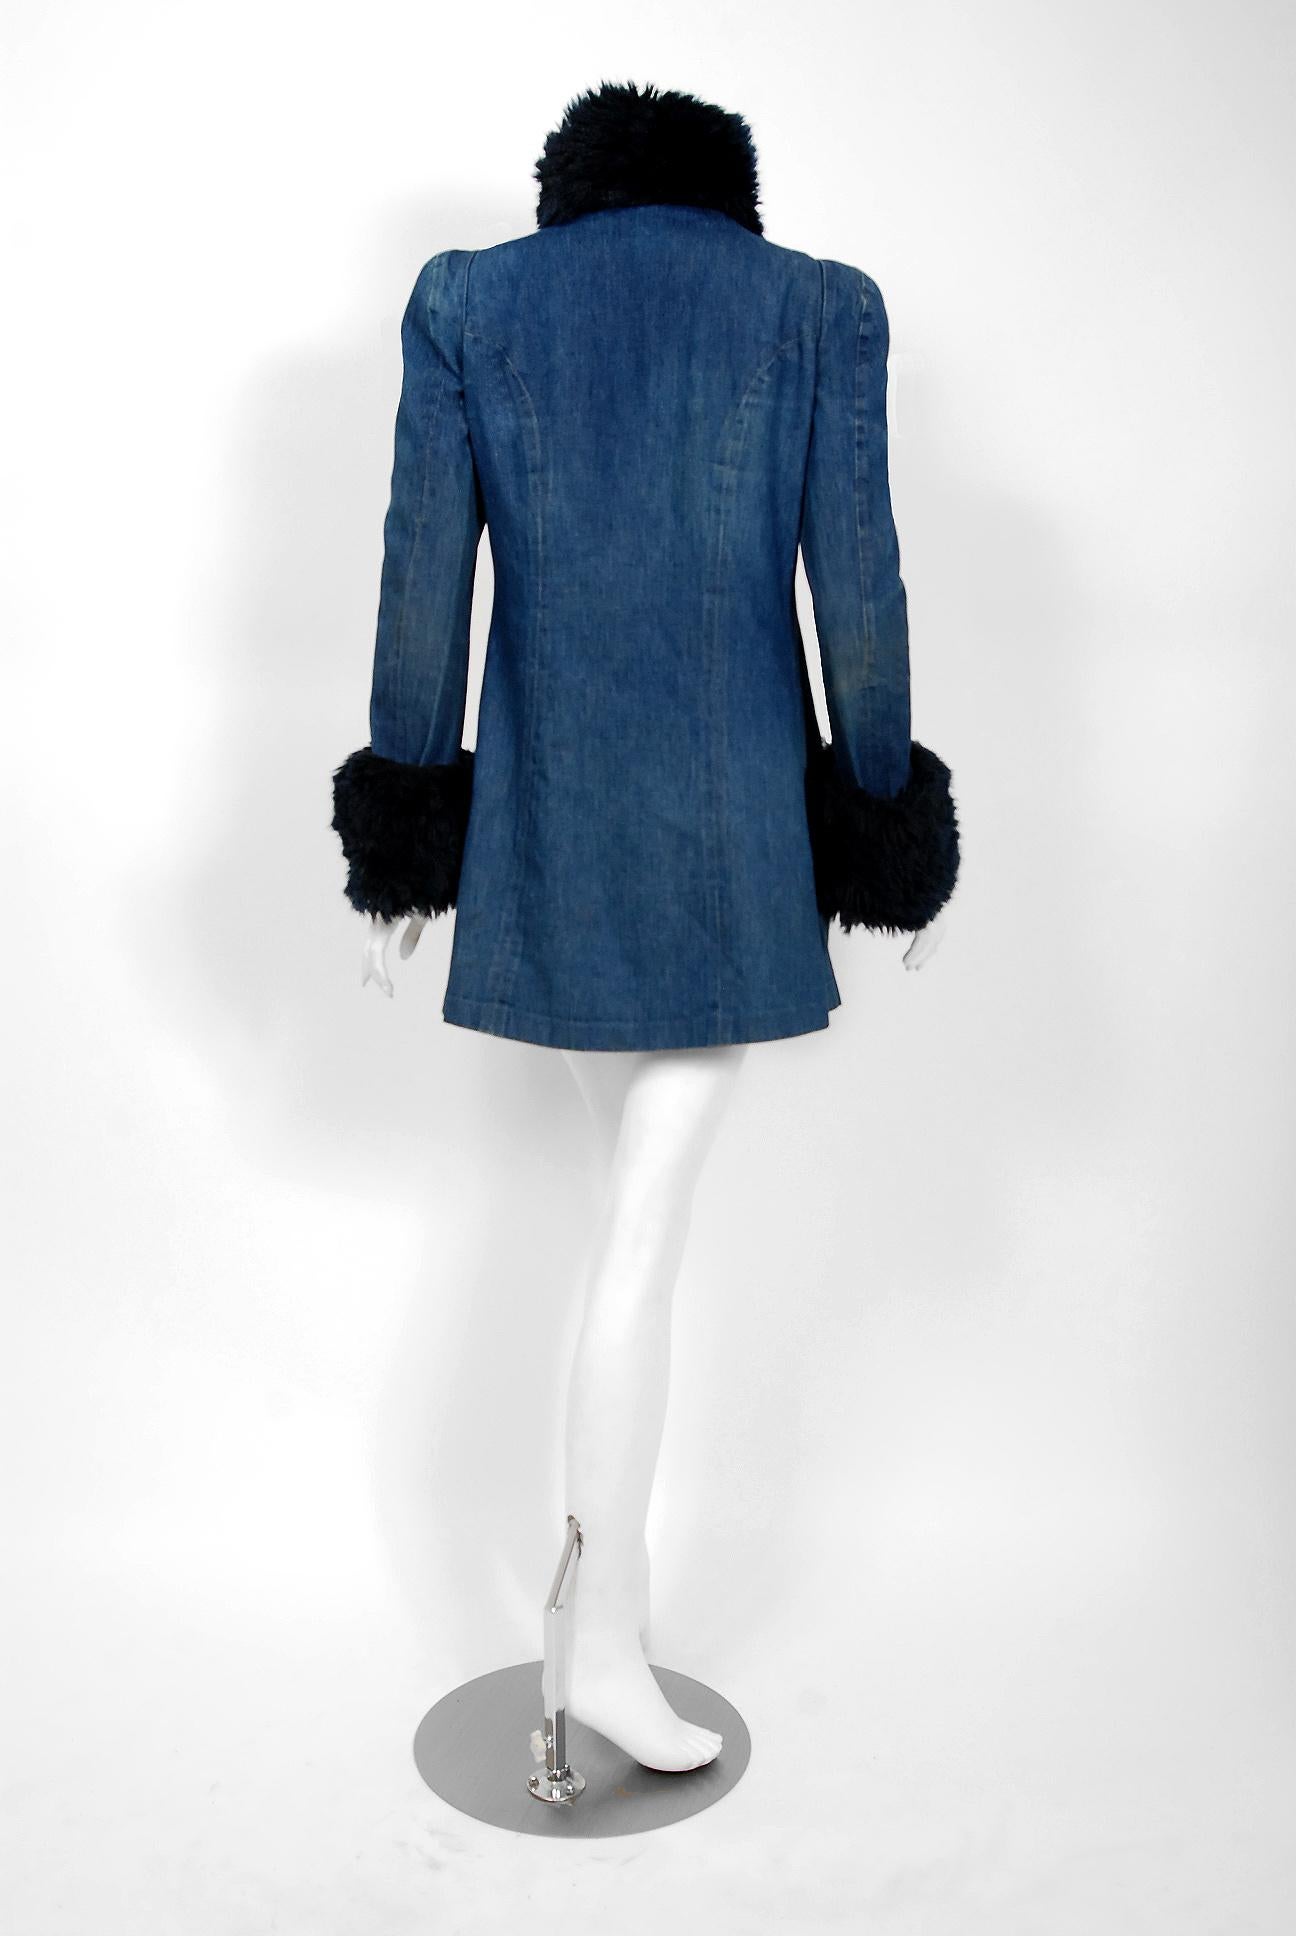 1975 Biba London Blue Denim and Faux-Fur Wide Cuff Sculpted Puff Shoulder Jacket 2